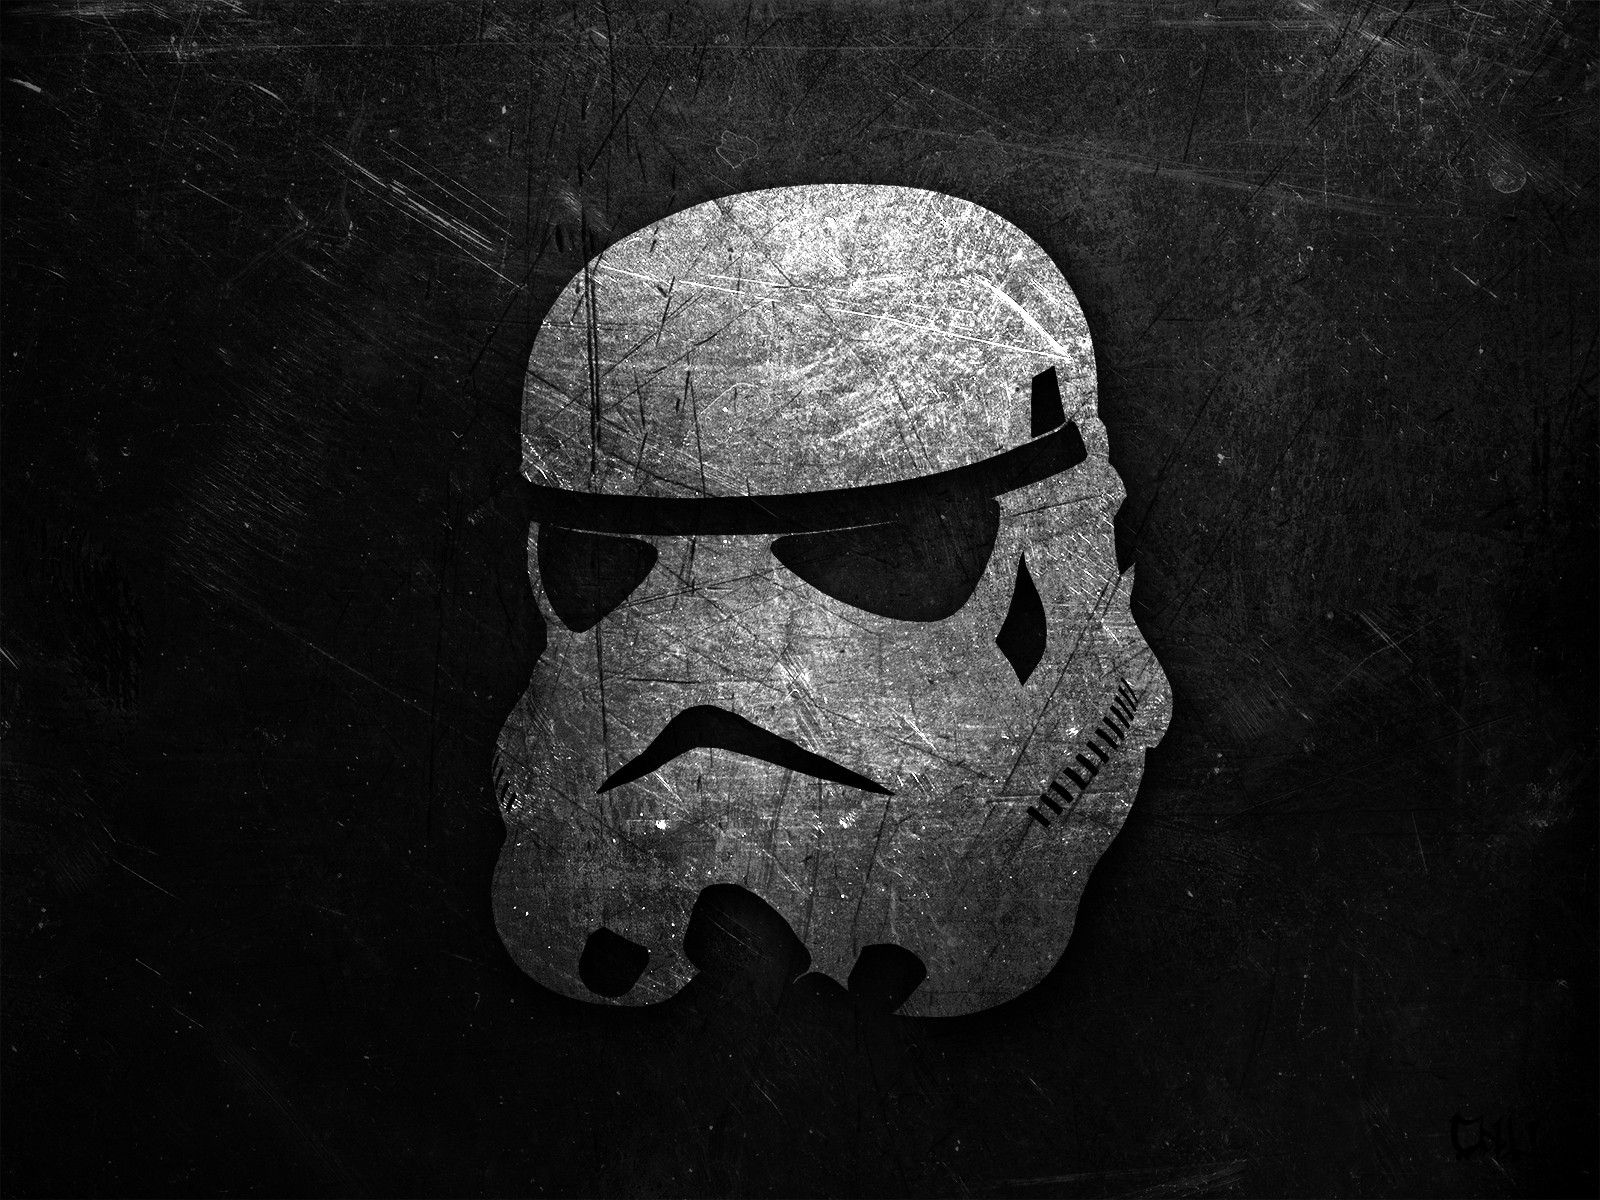 Stormtrooper Wallpaper Star Wars